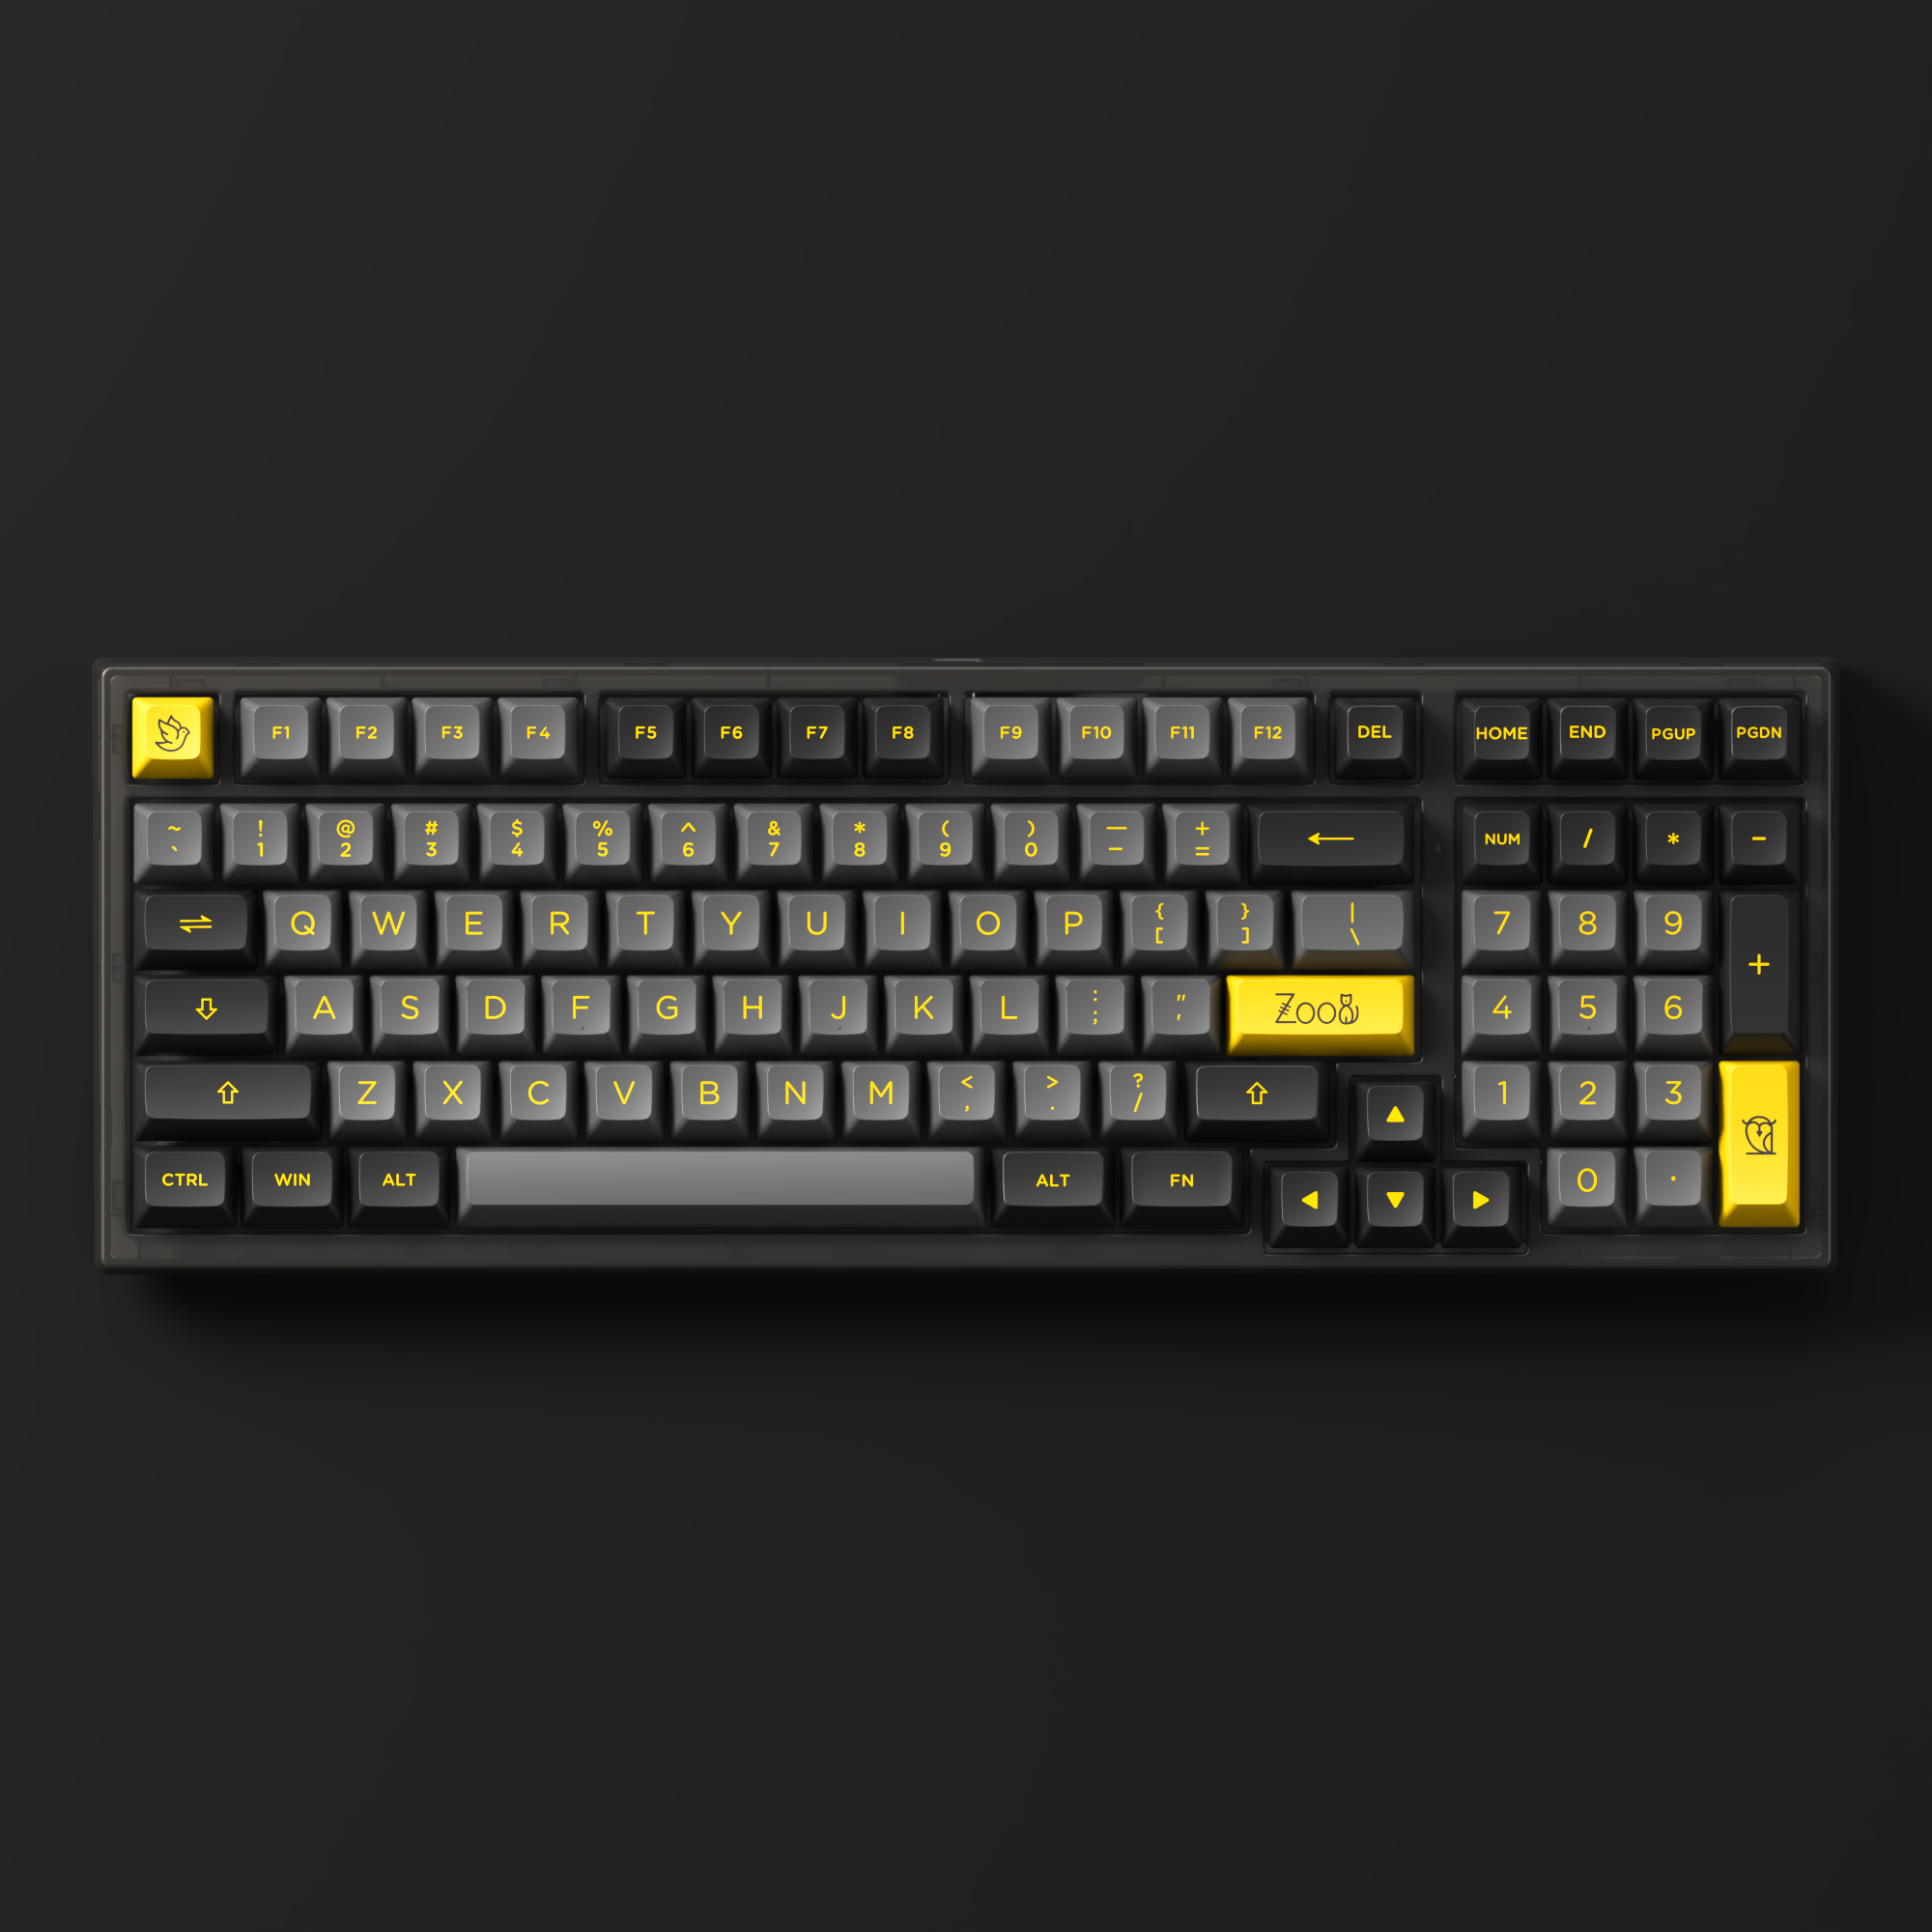 Black & Gold PC98B Plus